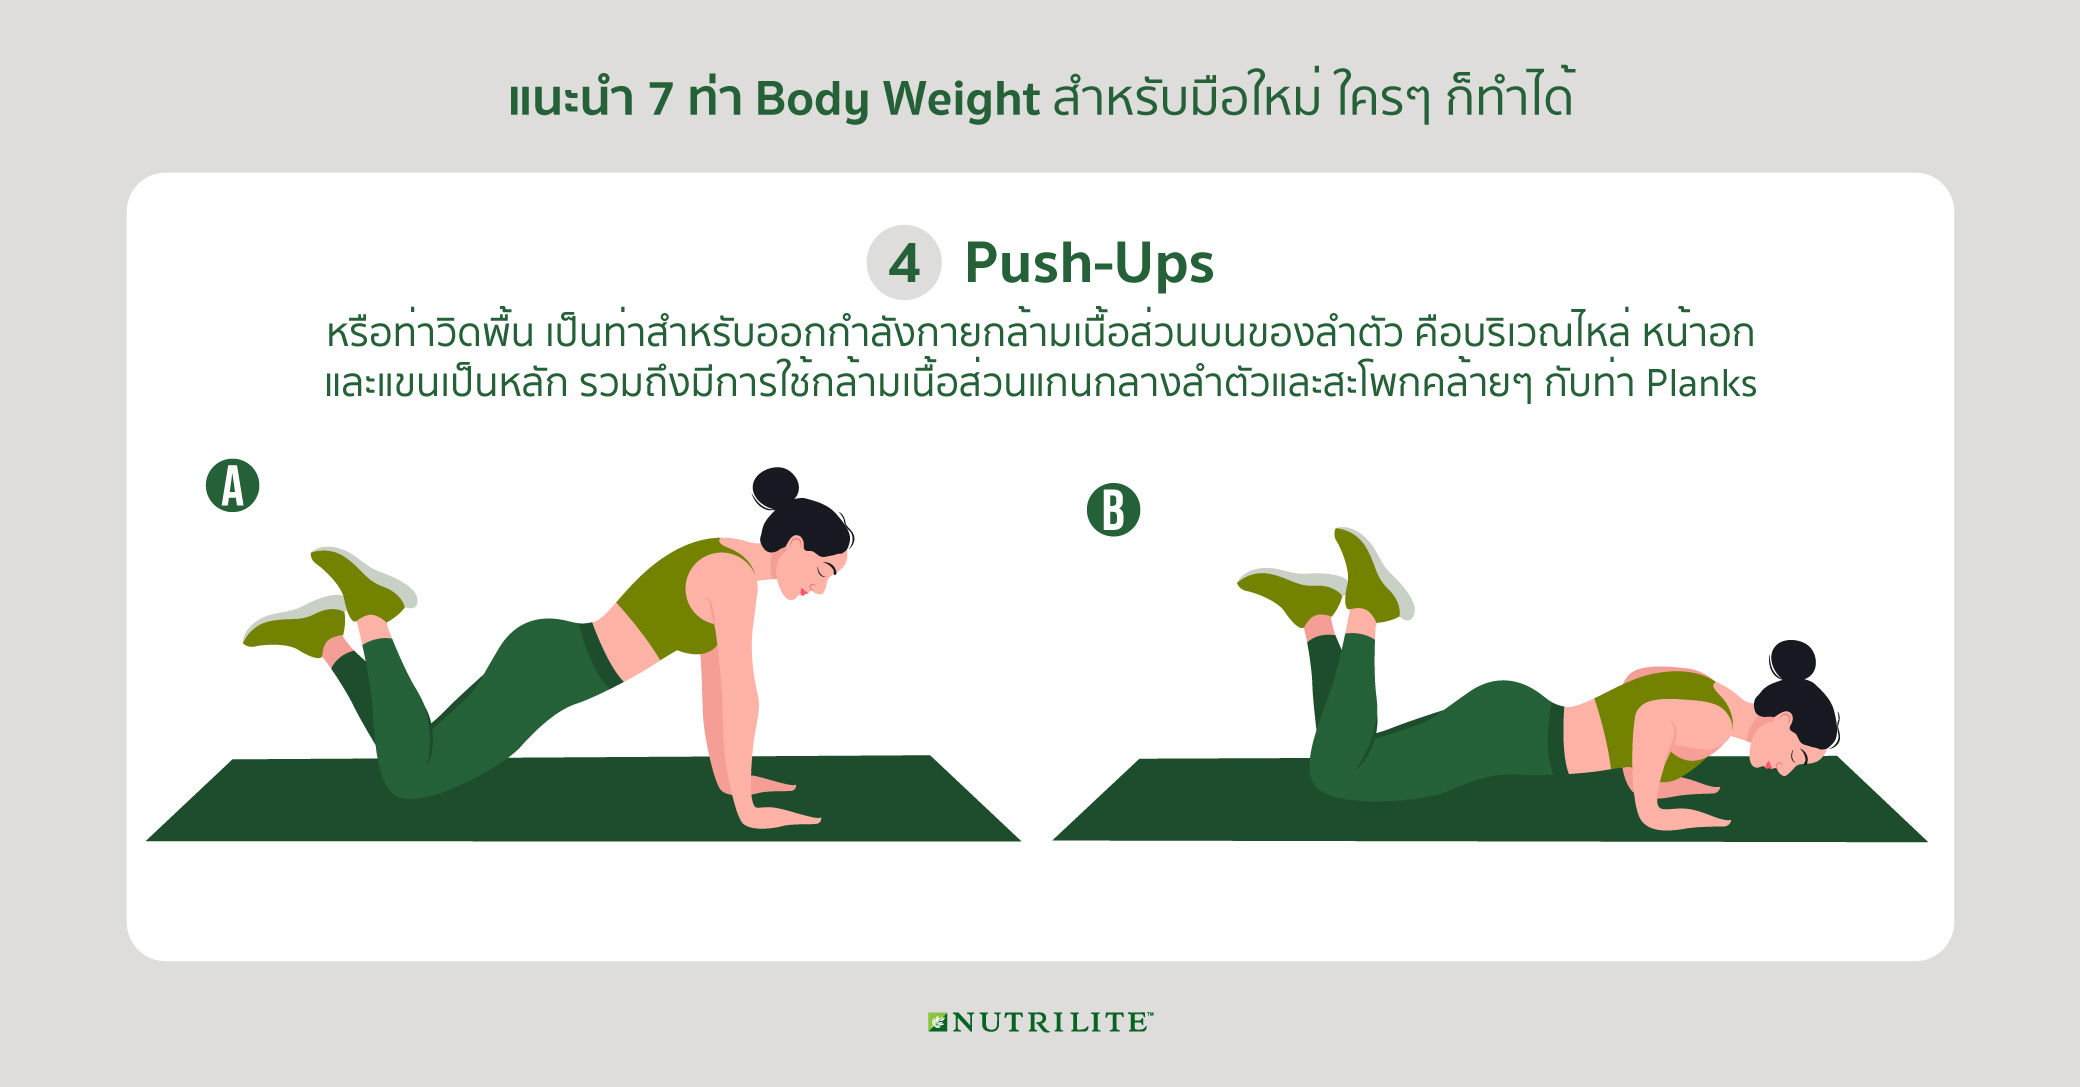 4. Push-Ups